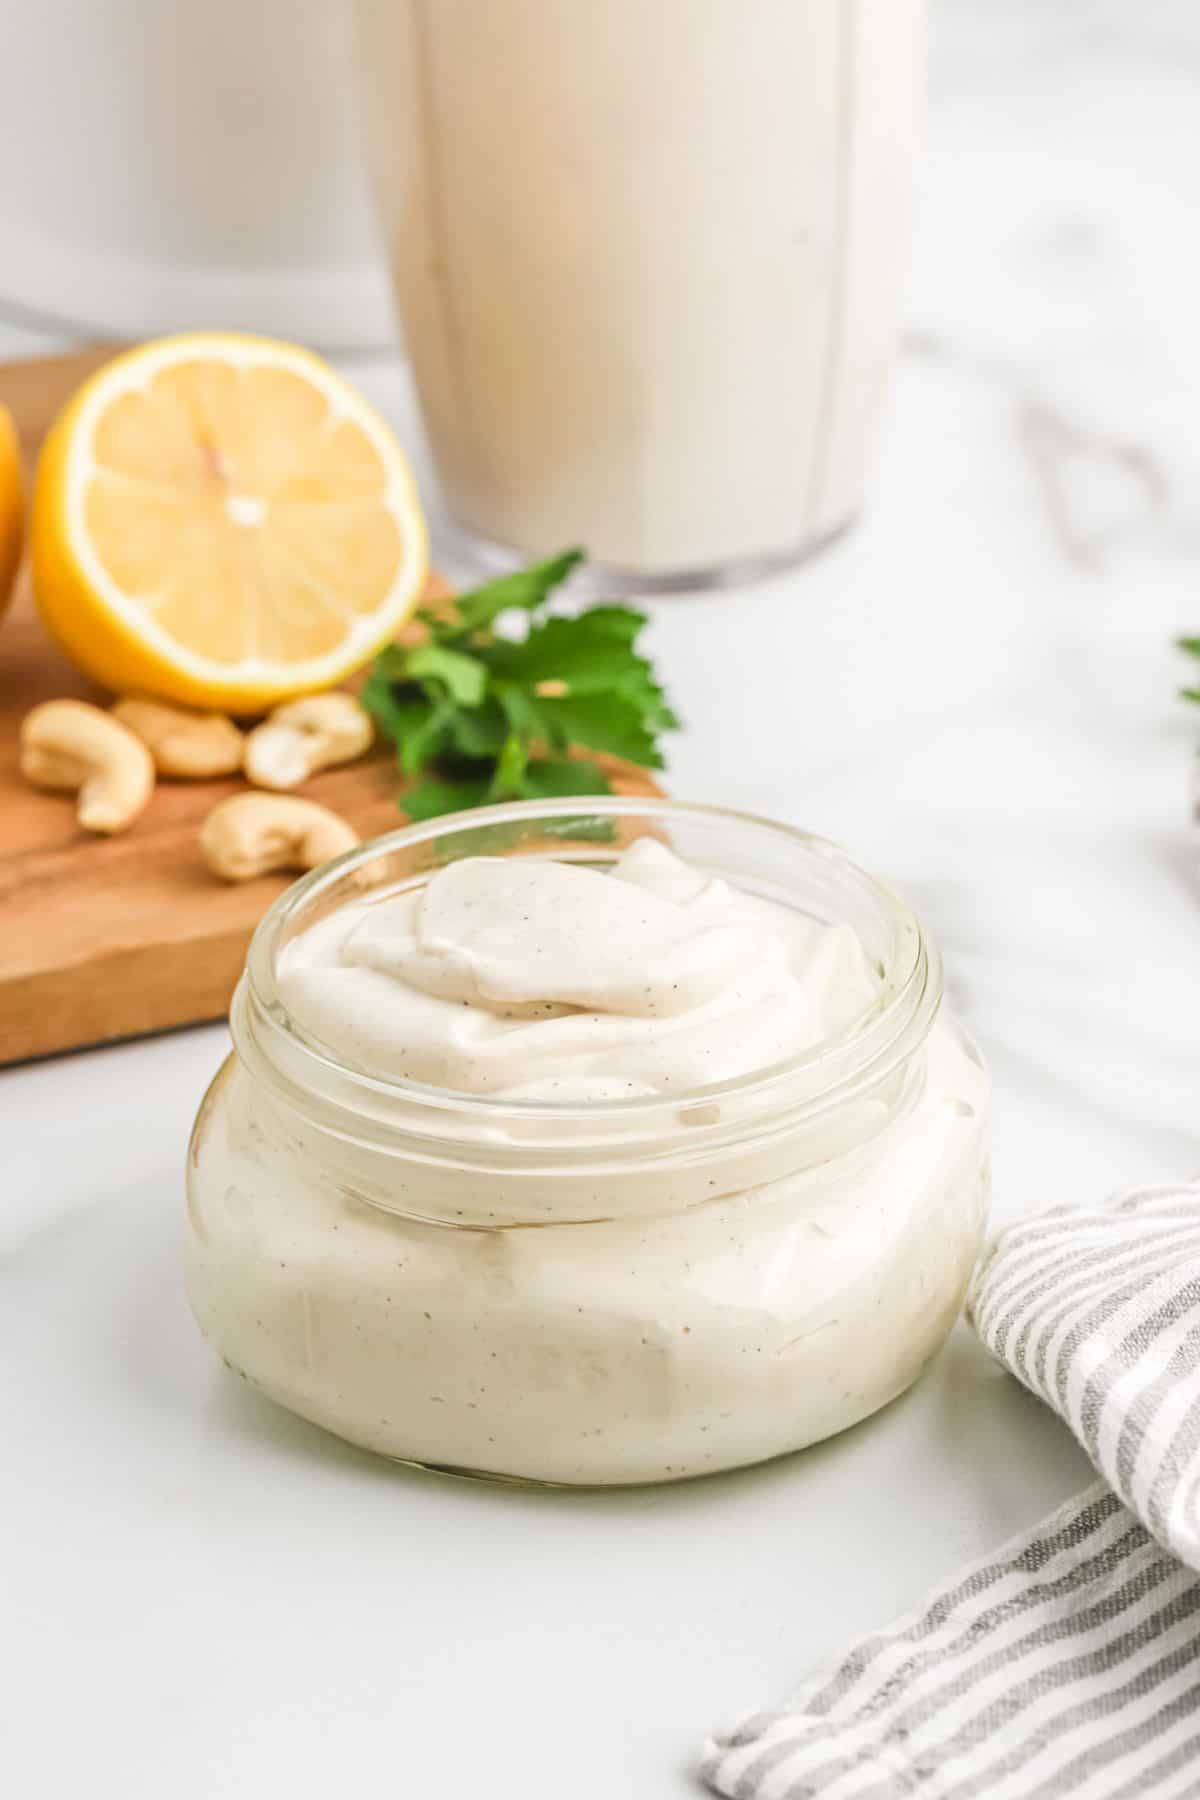 Sour cream in glass jar with garnish in background.